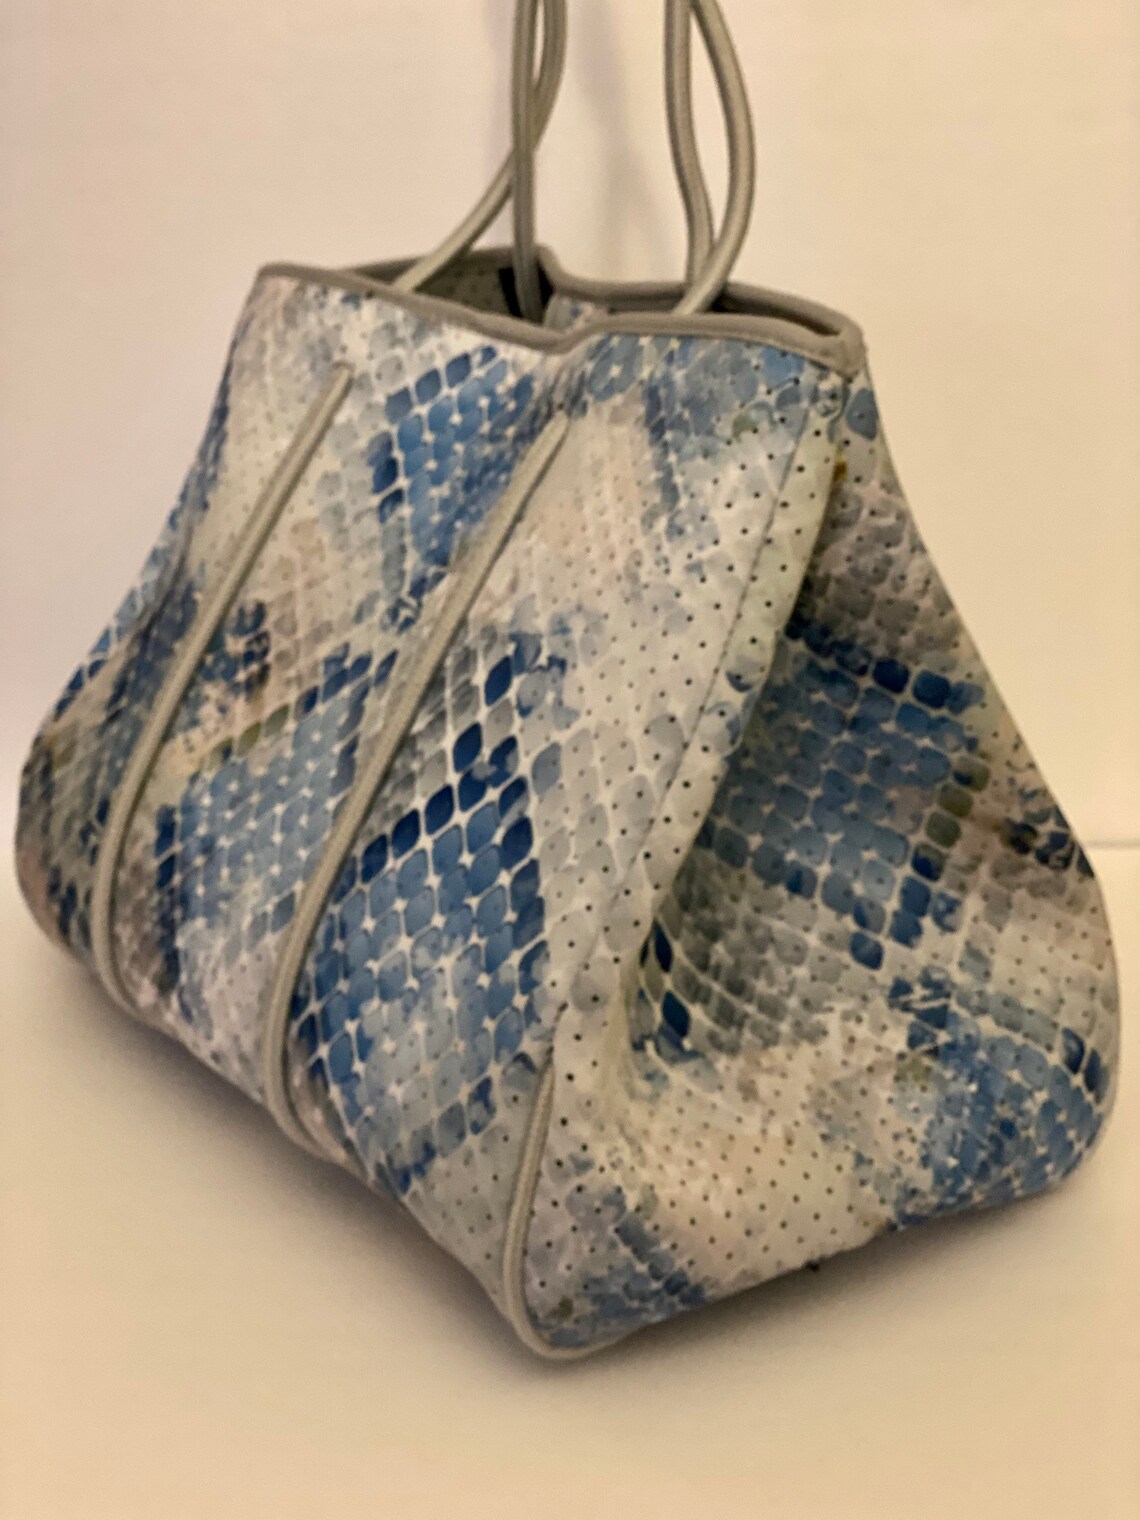 Neoprene Tote Bag Blue and Grey Neoprene Tote Bag Perfect | Etsy